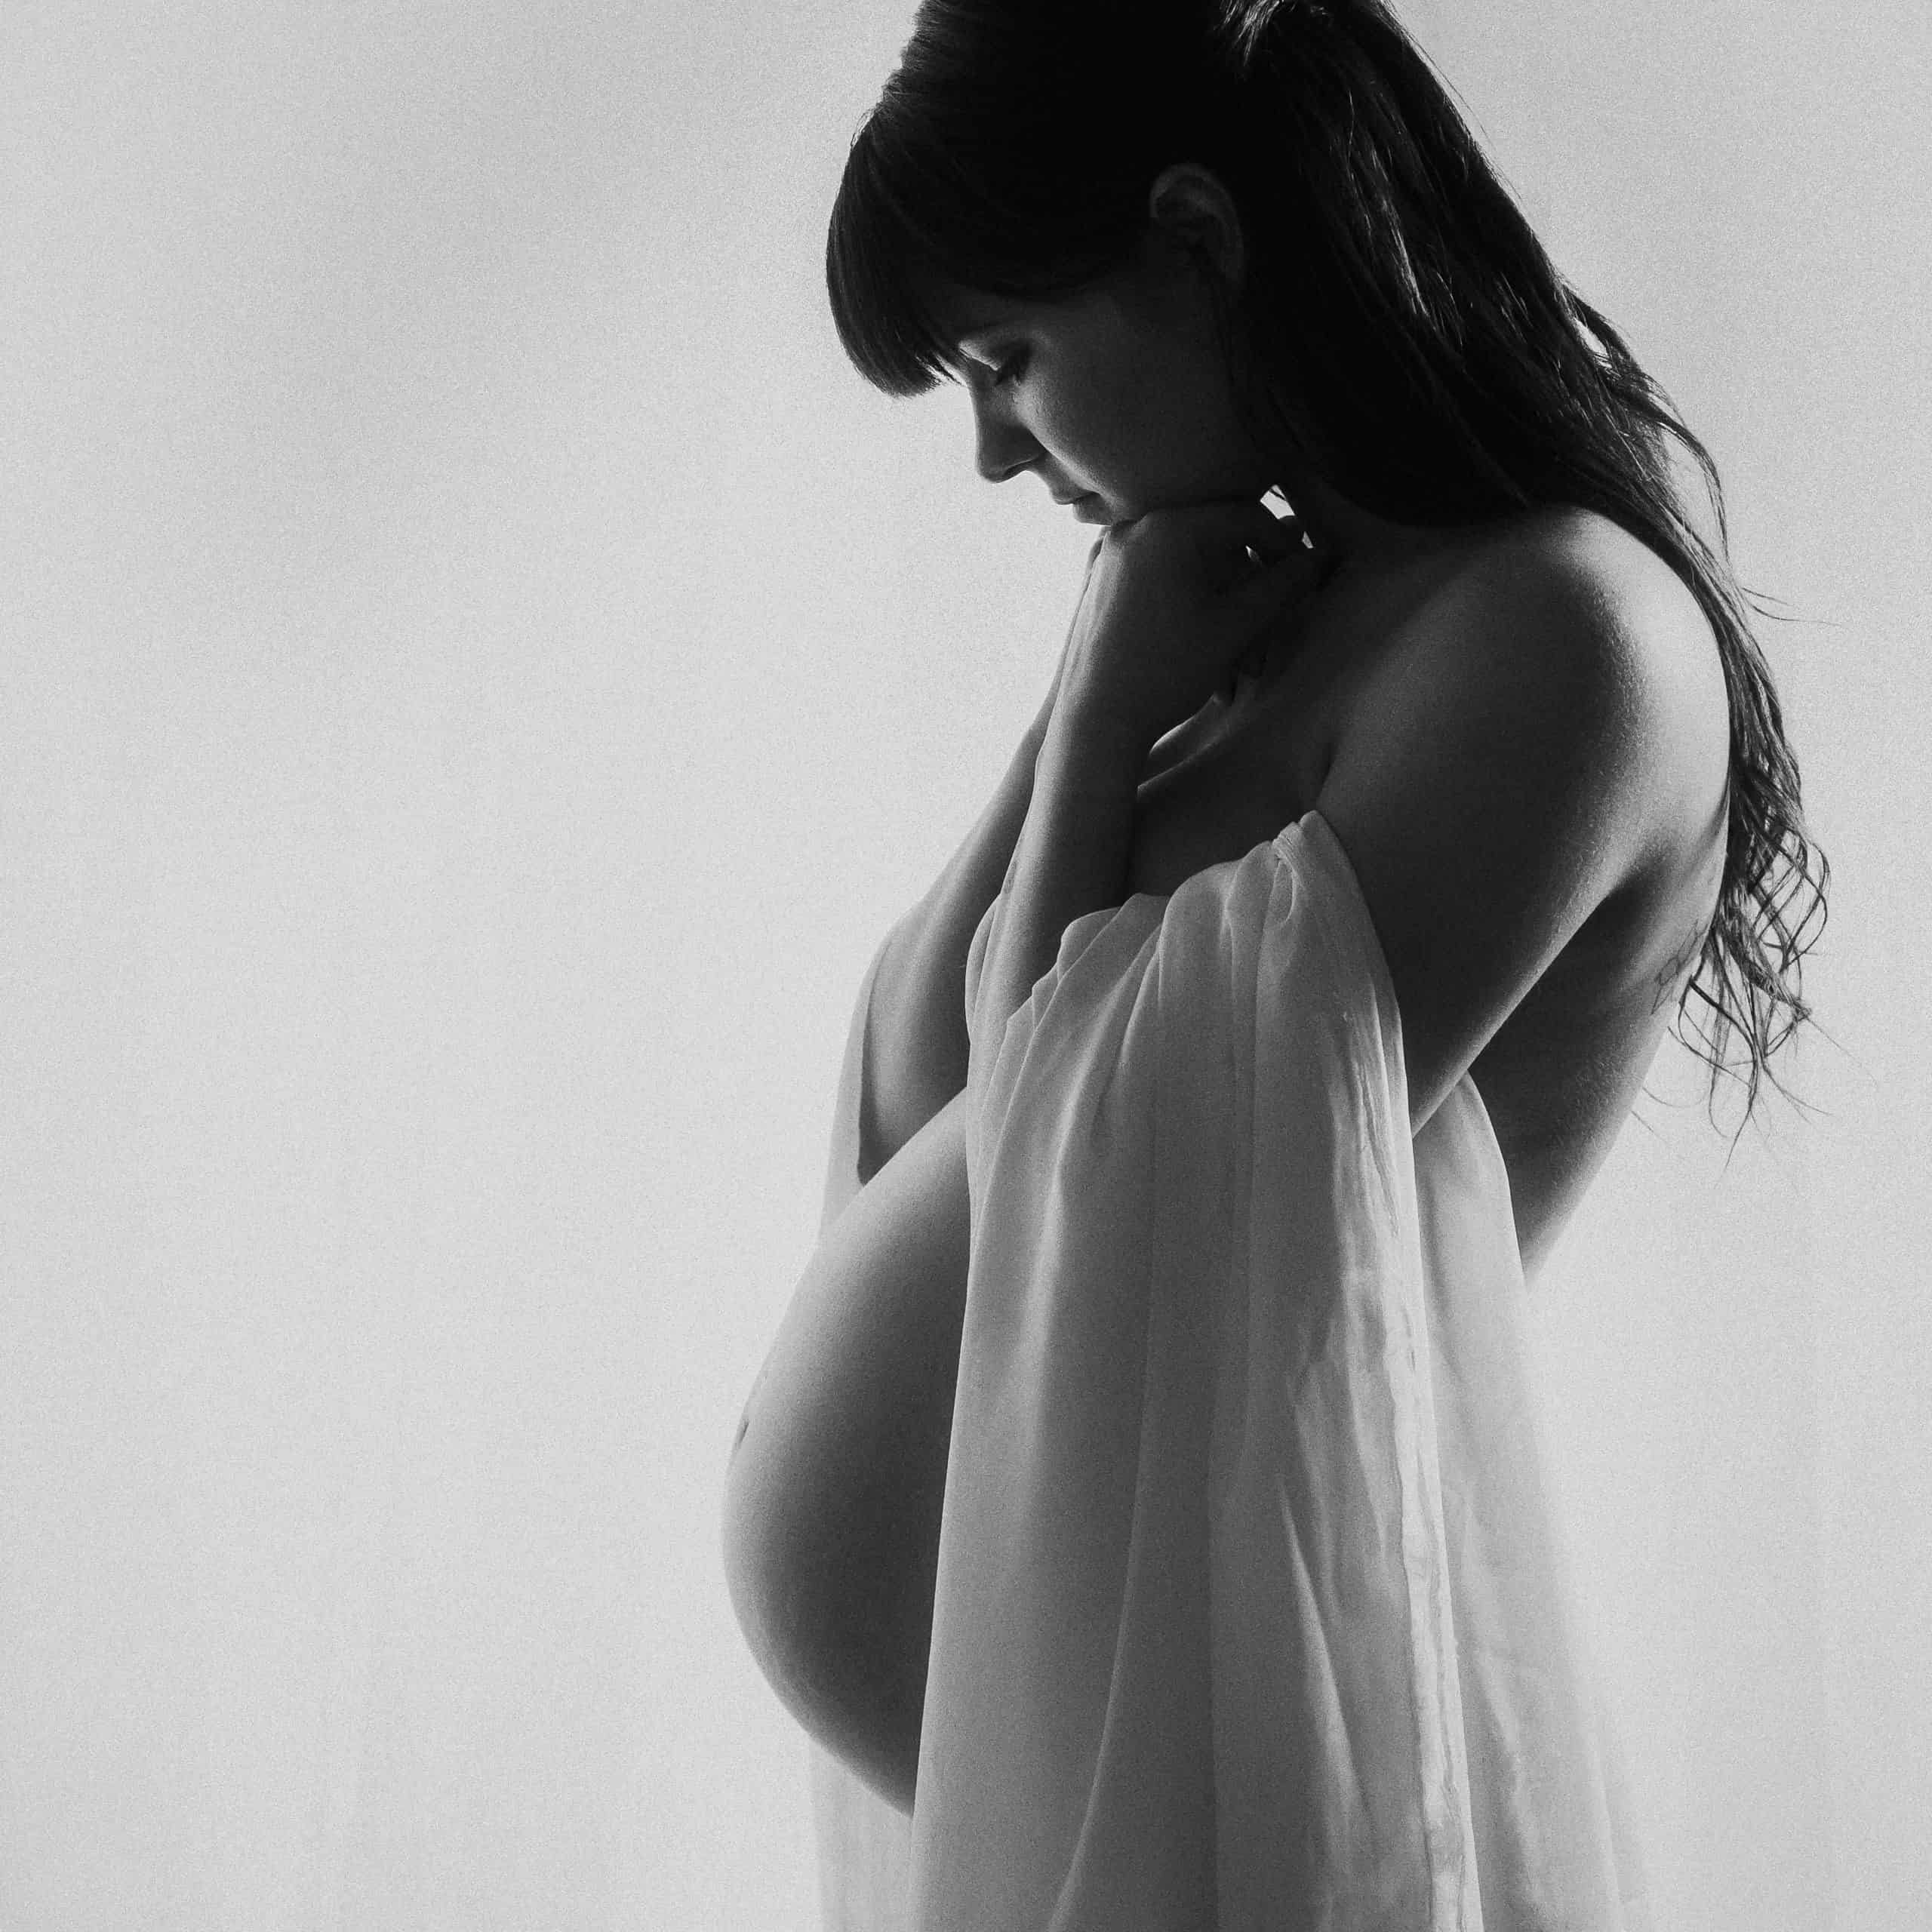 Maternity mini photo shoot explained. 7